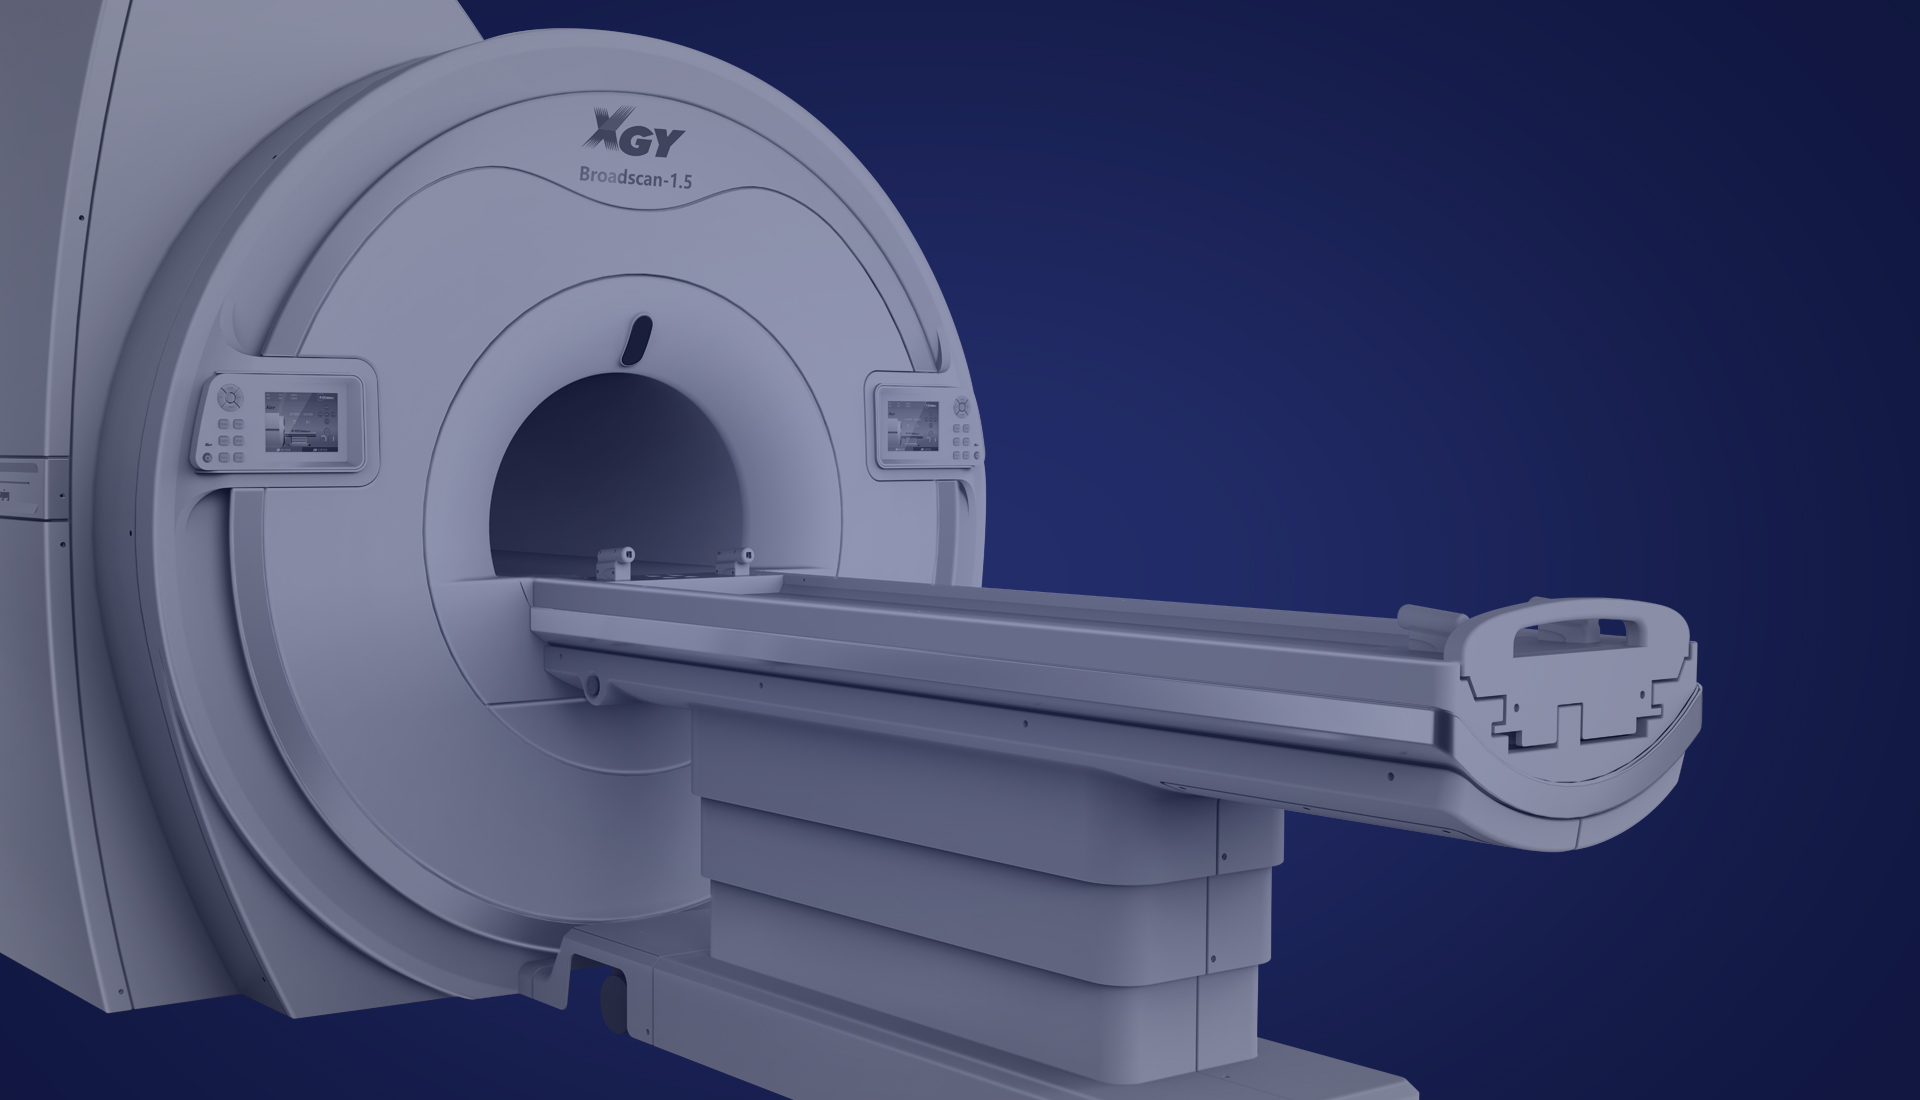 Magnetic resonance imaging system